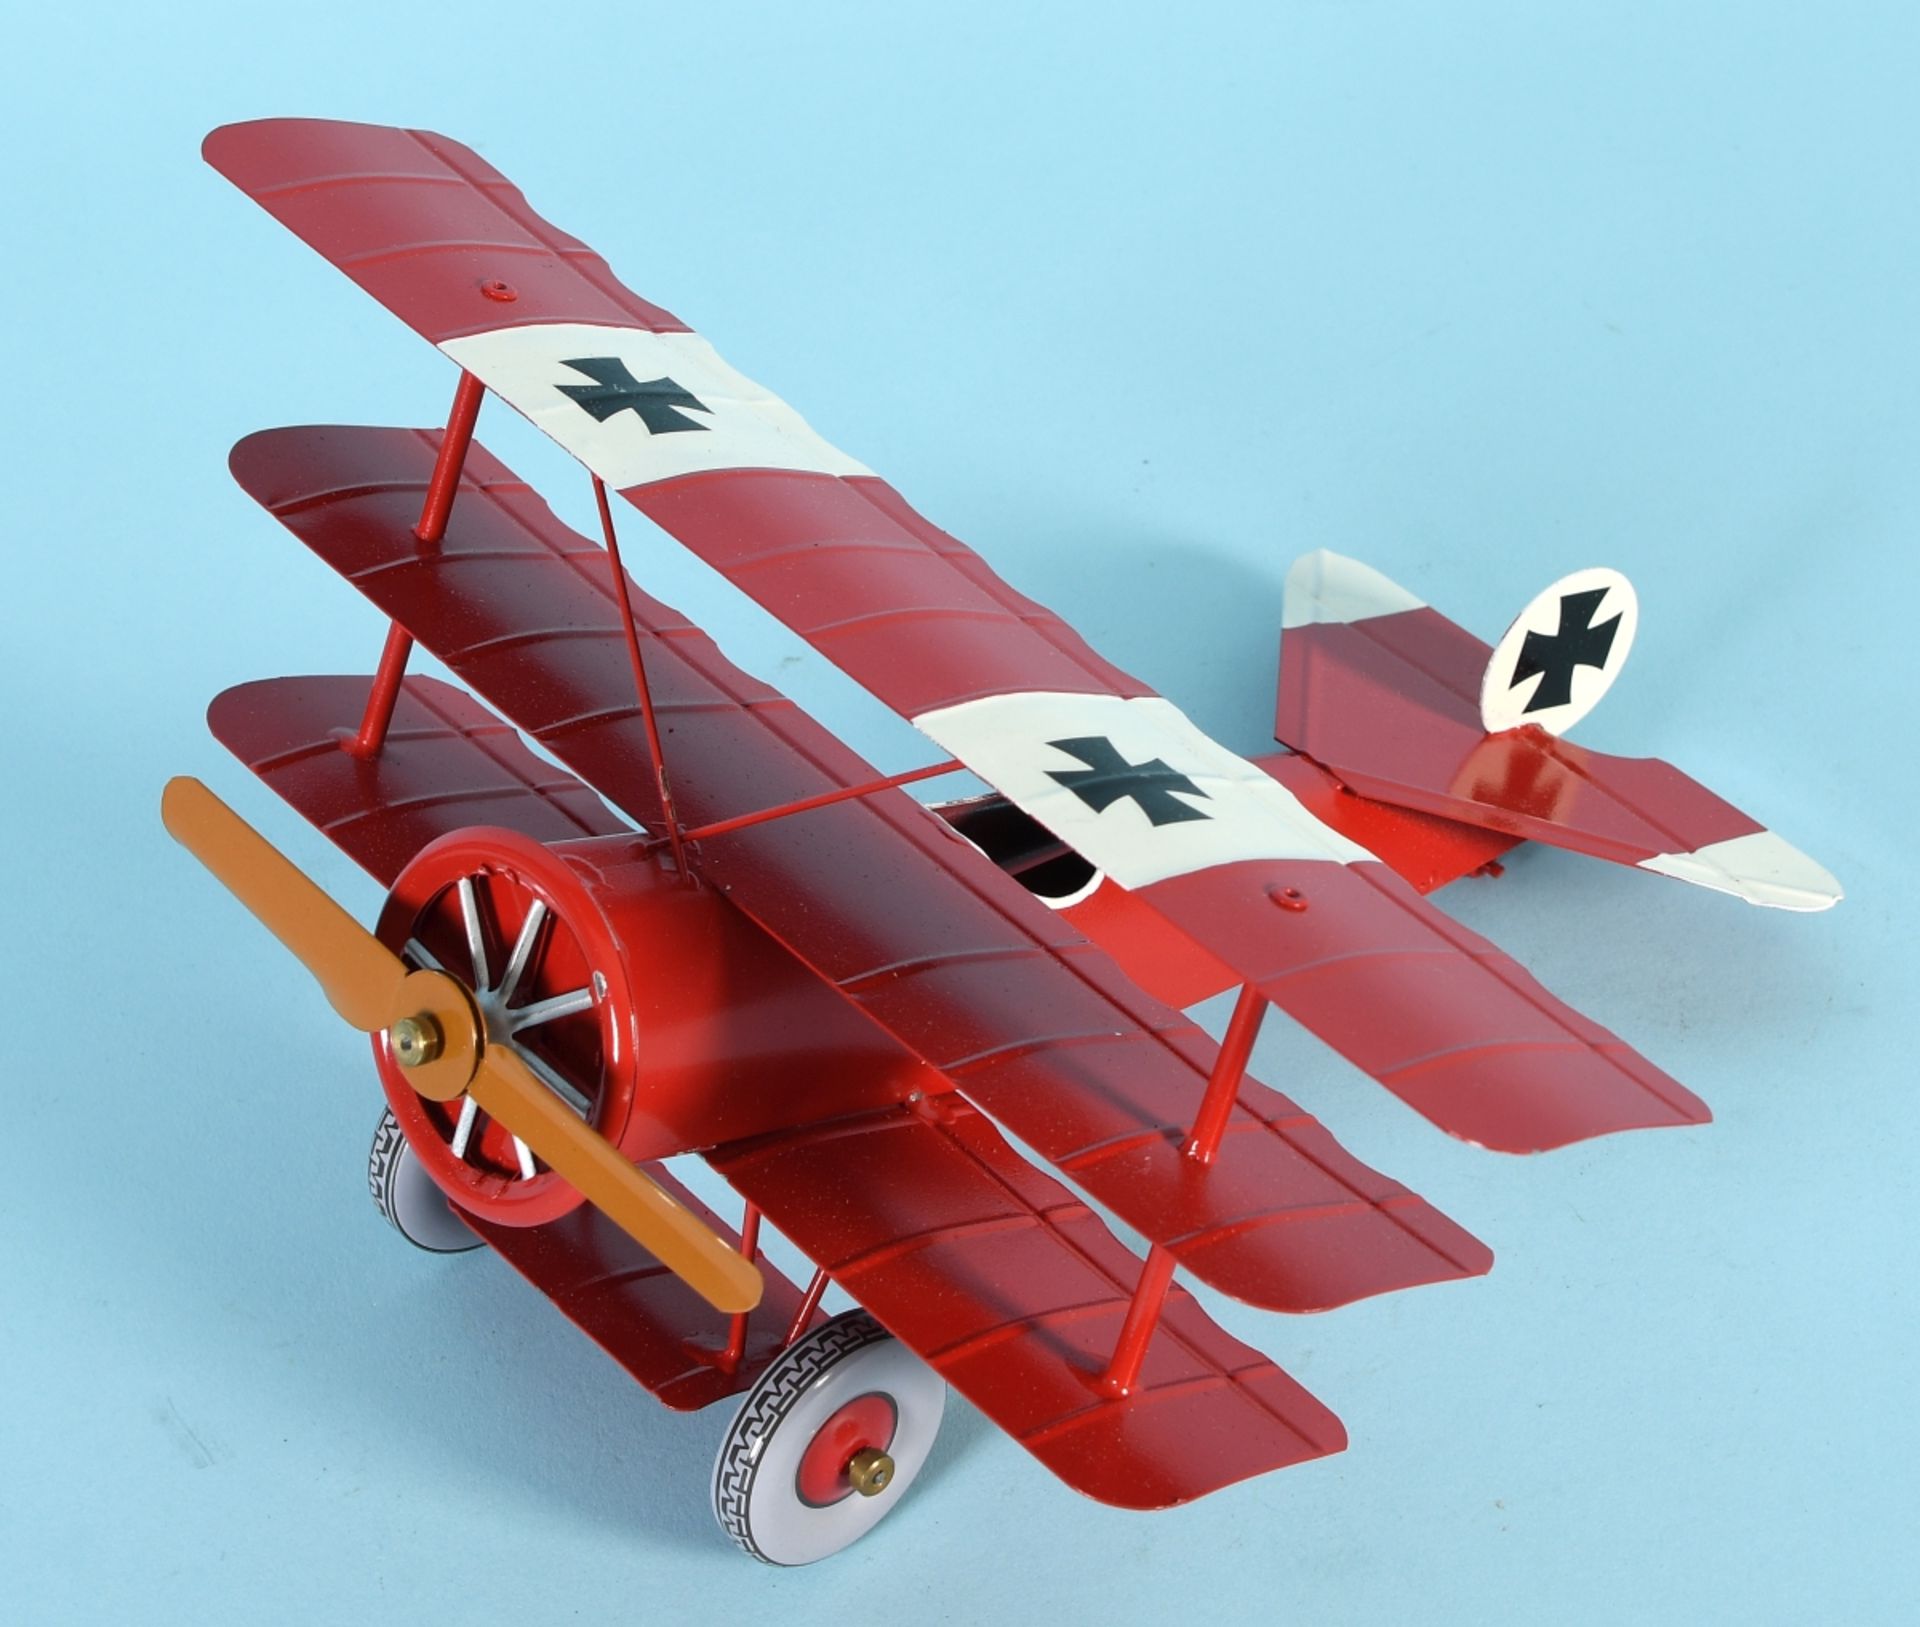 Modellflugzeug "Tucher & Walther" - Roter Baron